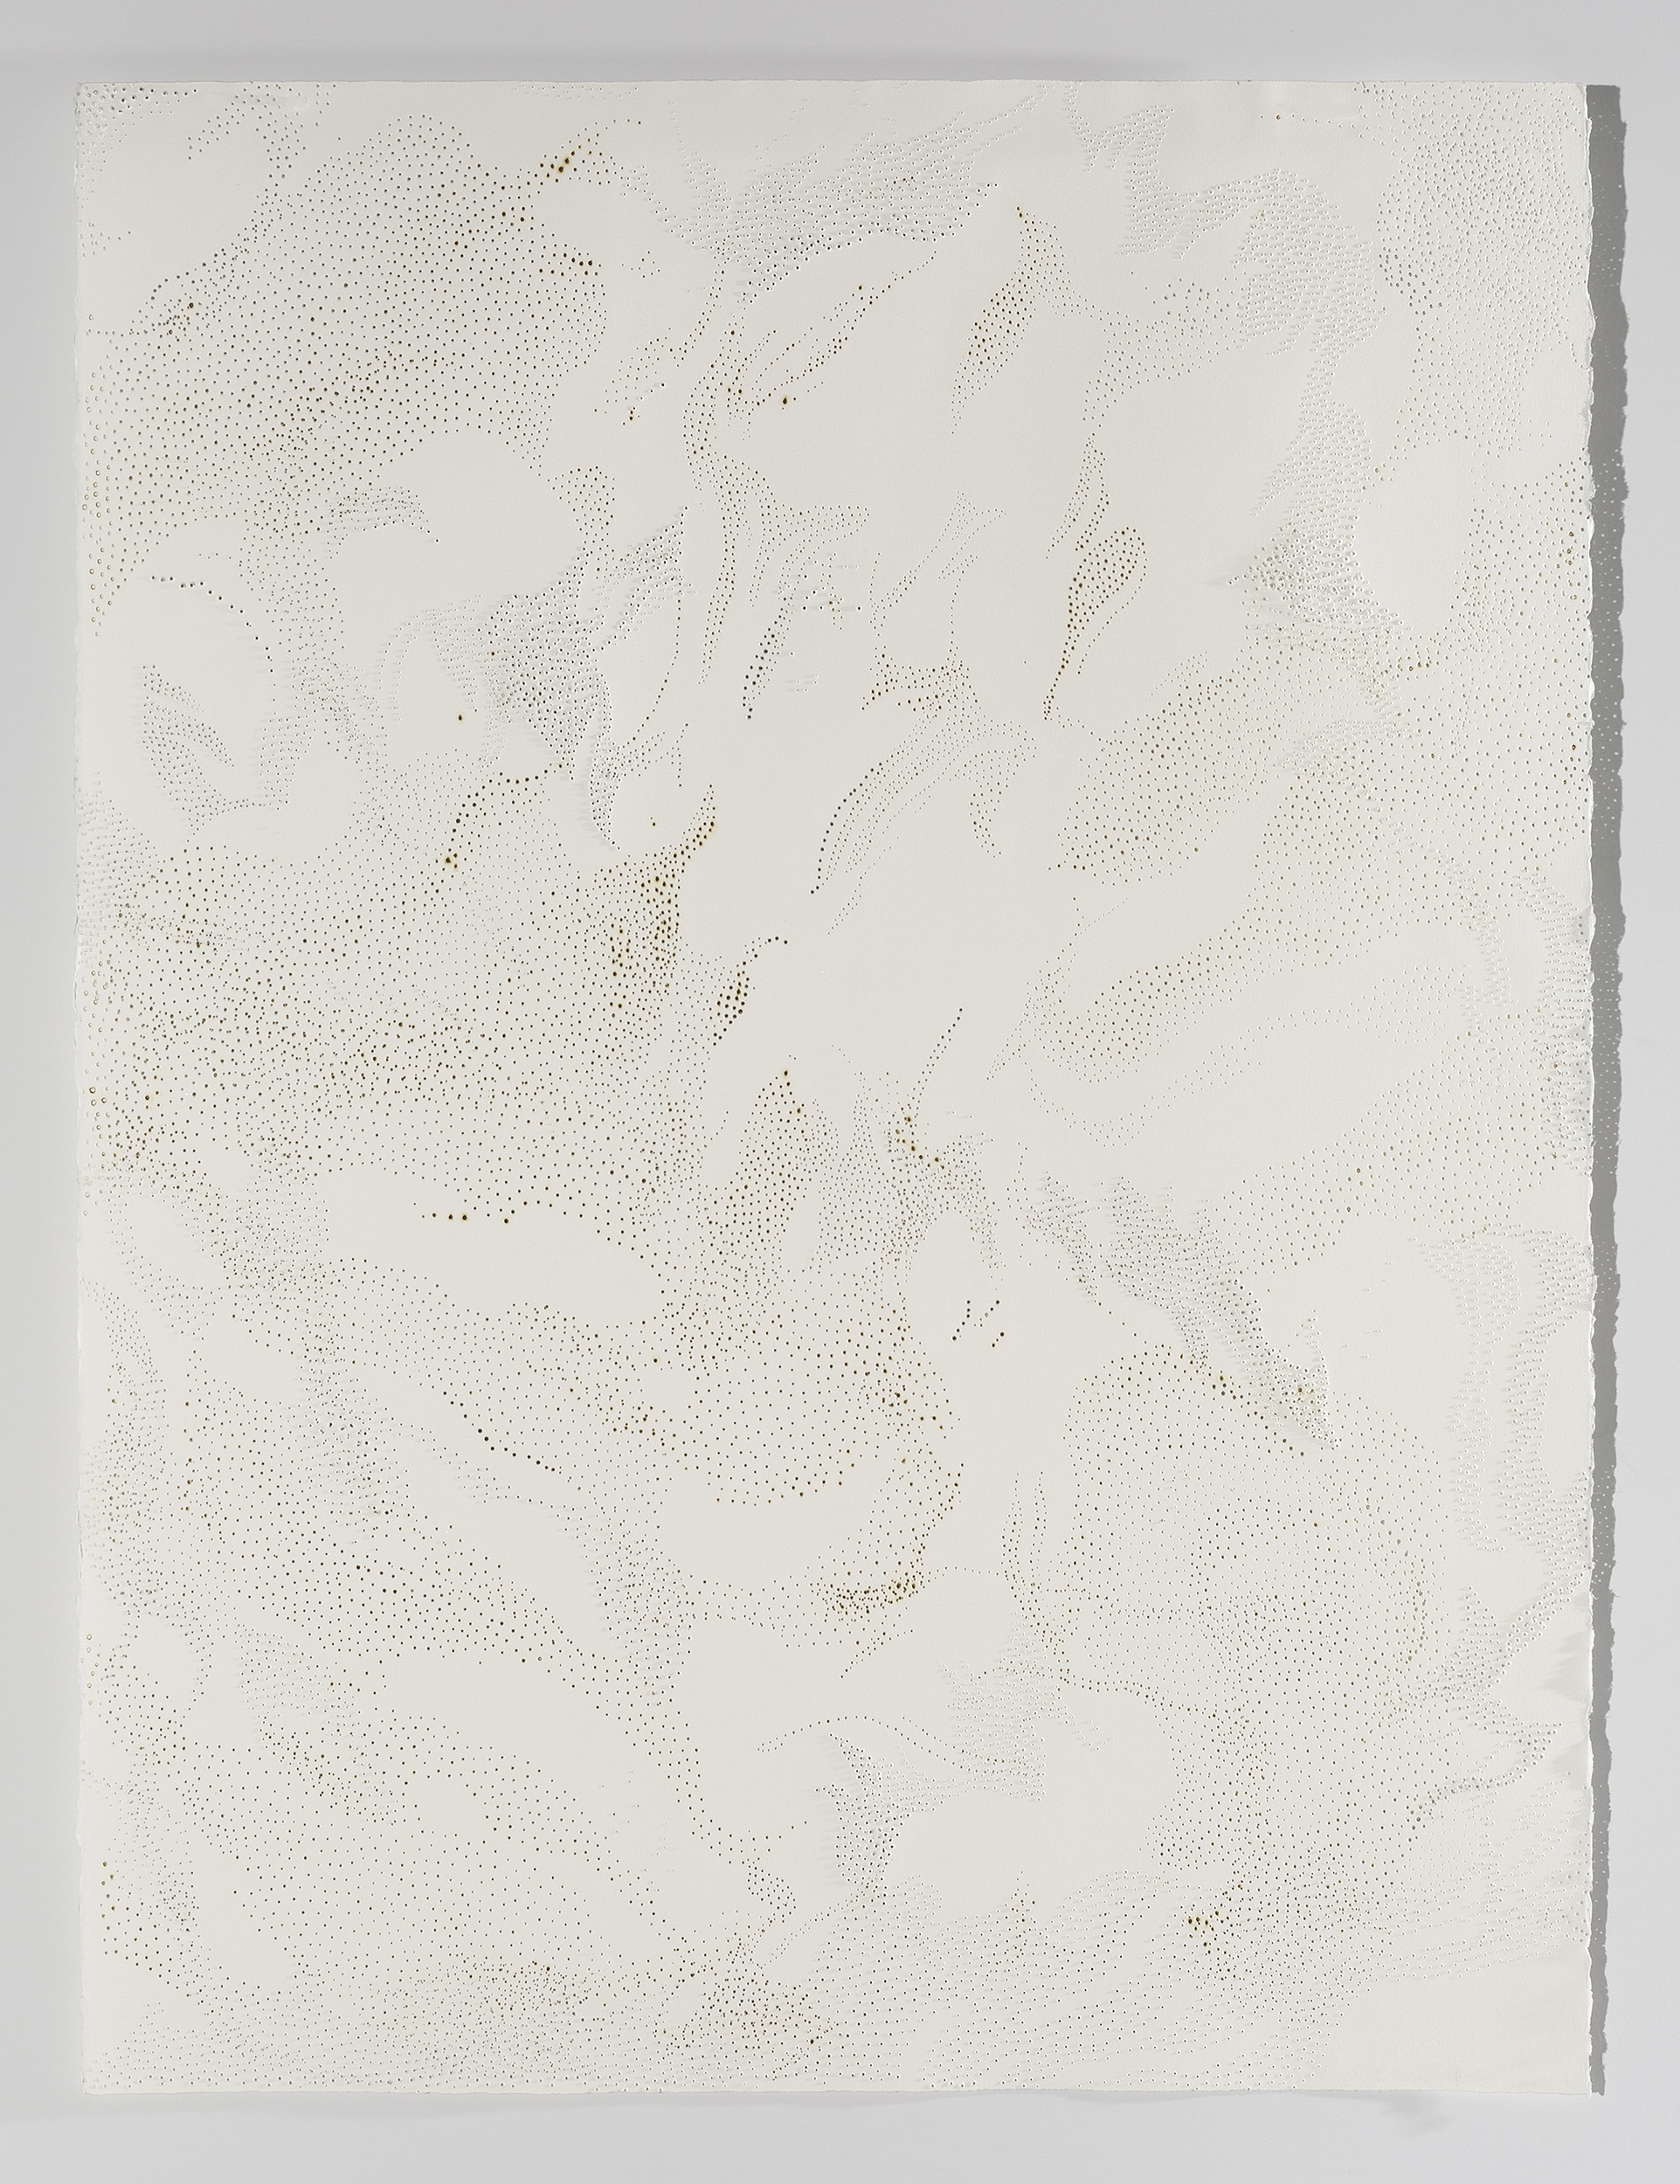 Melinda Schawel 'Traces IV' perforated paper 76 x 57cm $3,800